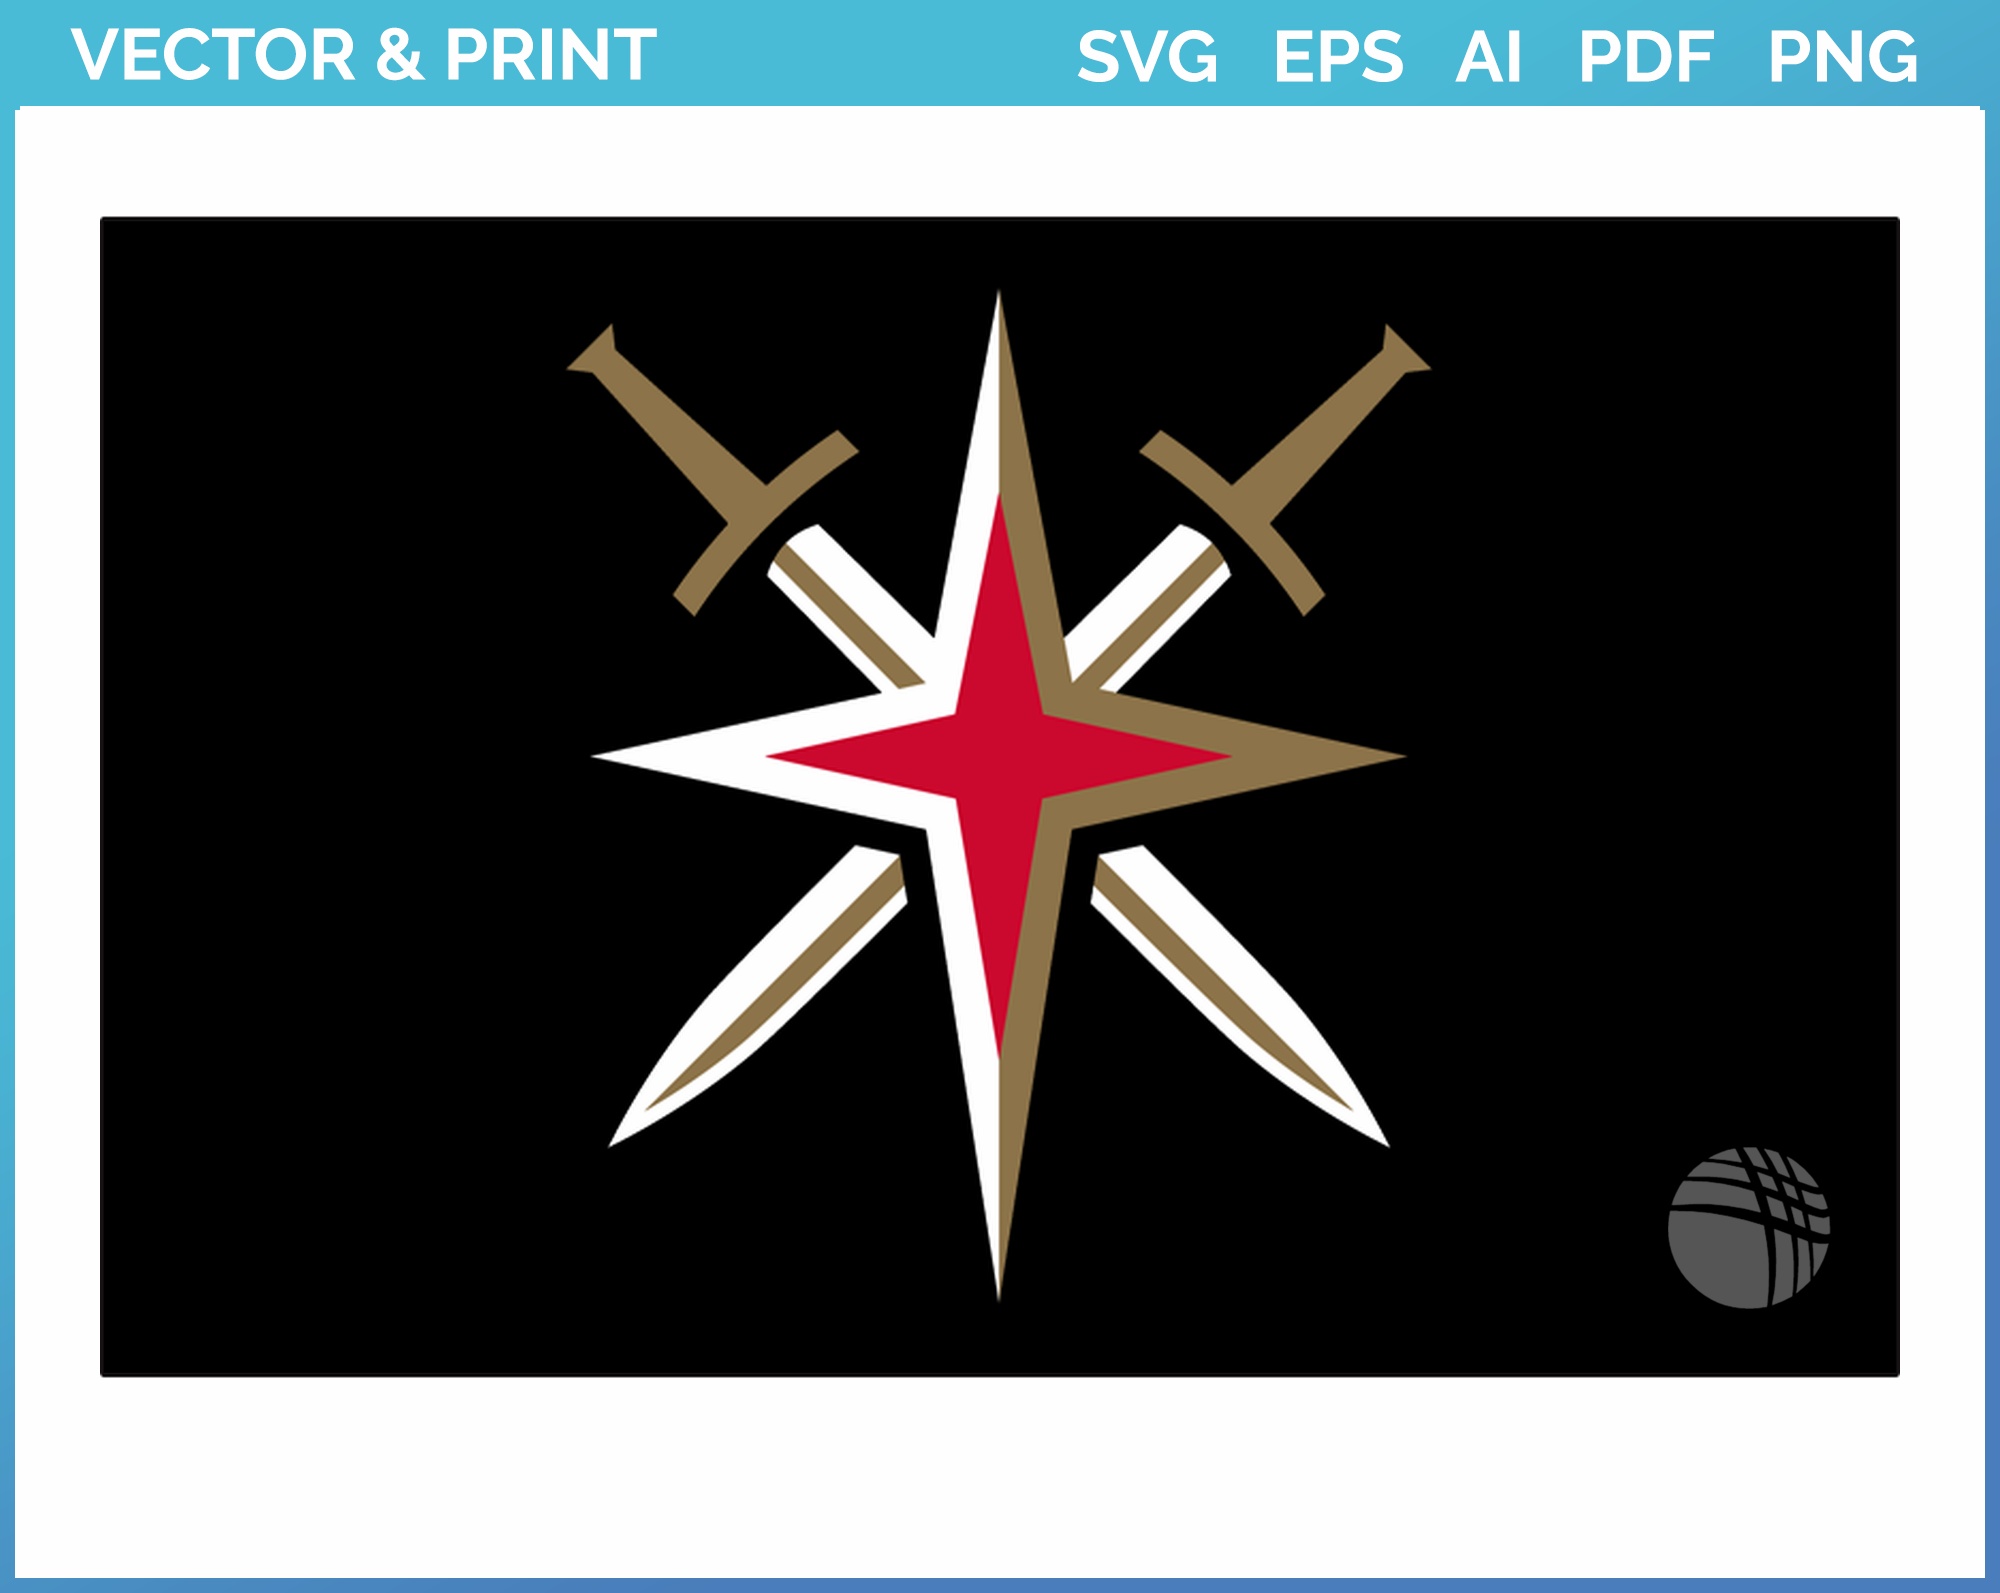 Vegas Golden Knights Logo PNG Transparent & SVG Vector - Freebie